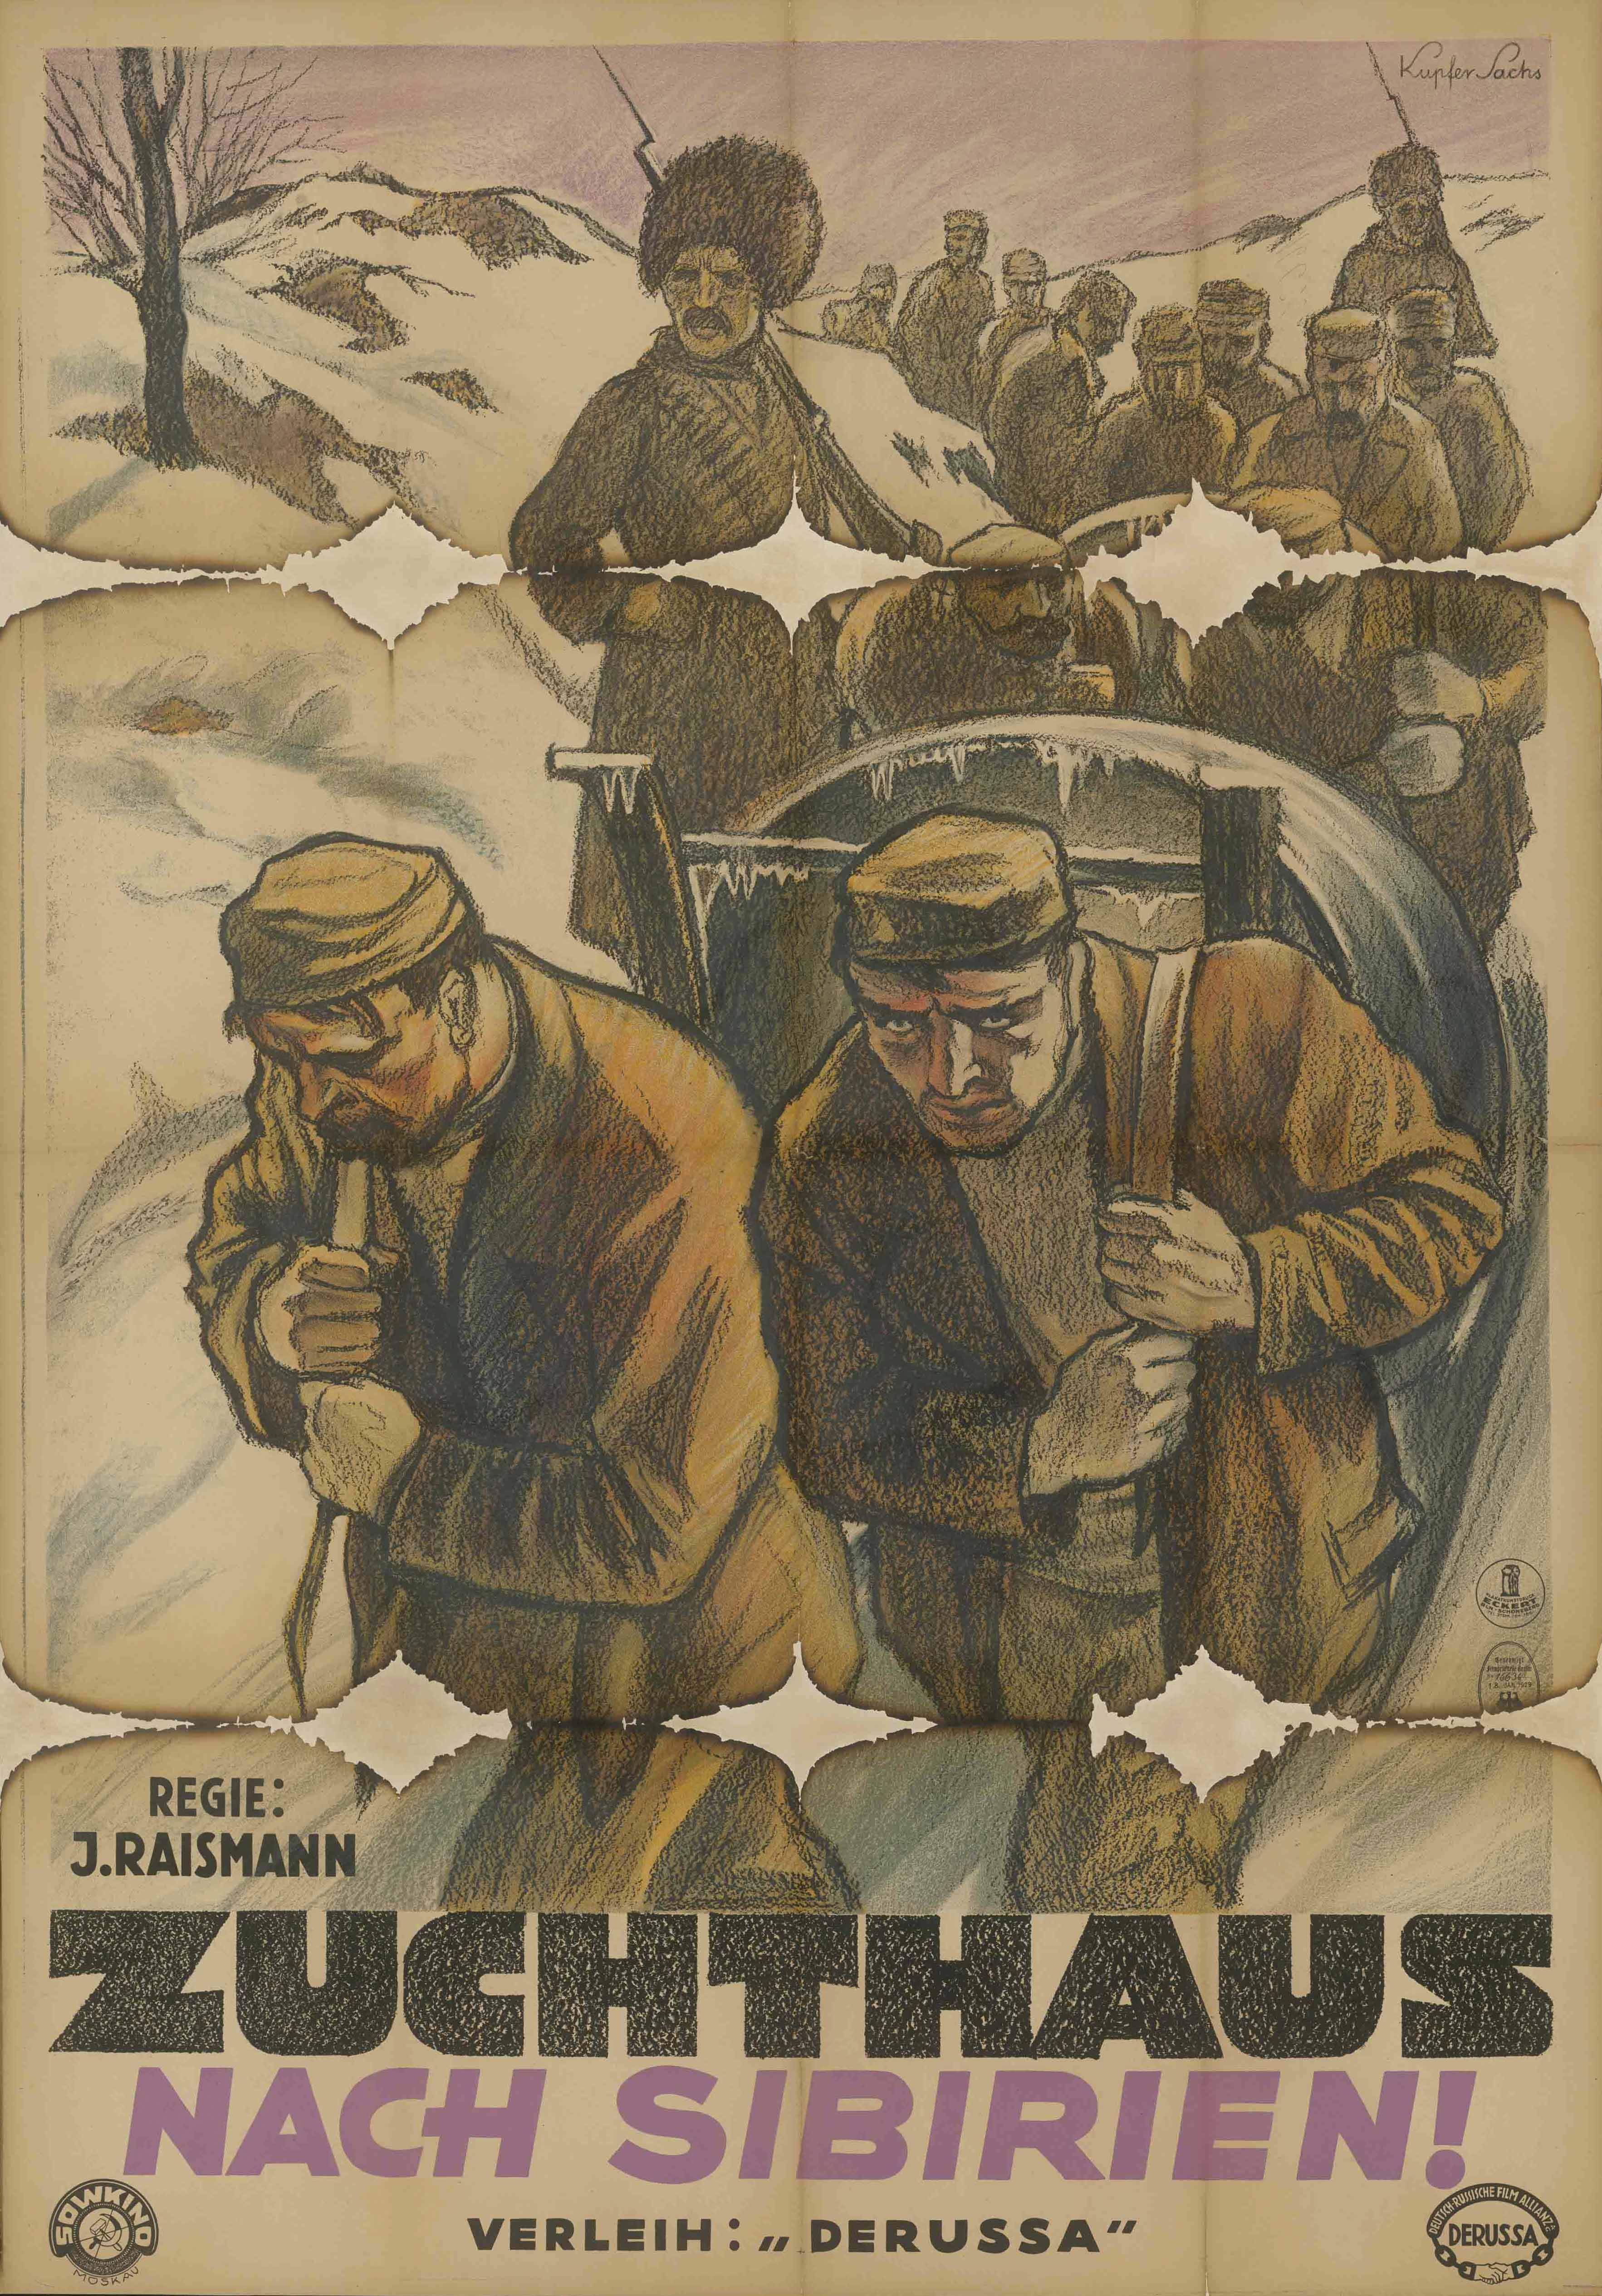 Film poster for Katorga, USSR 1928